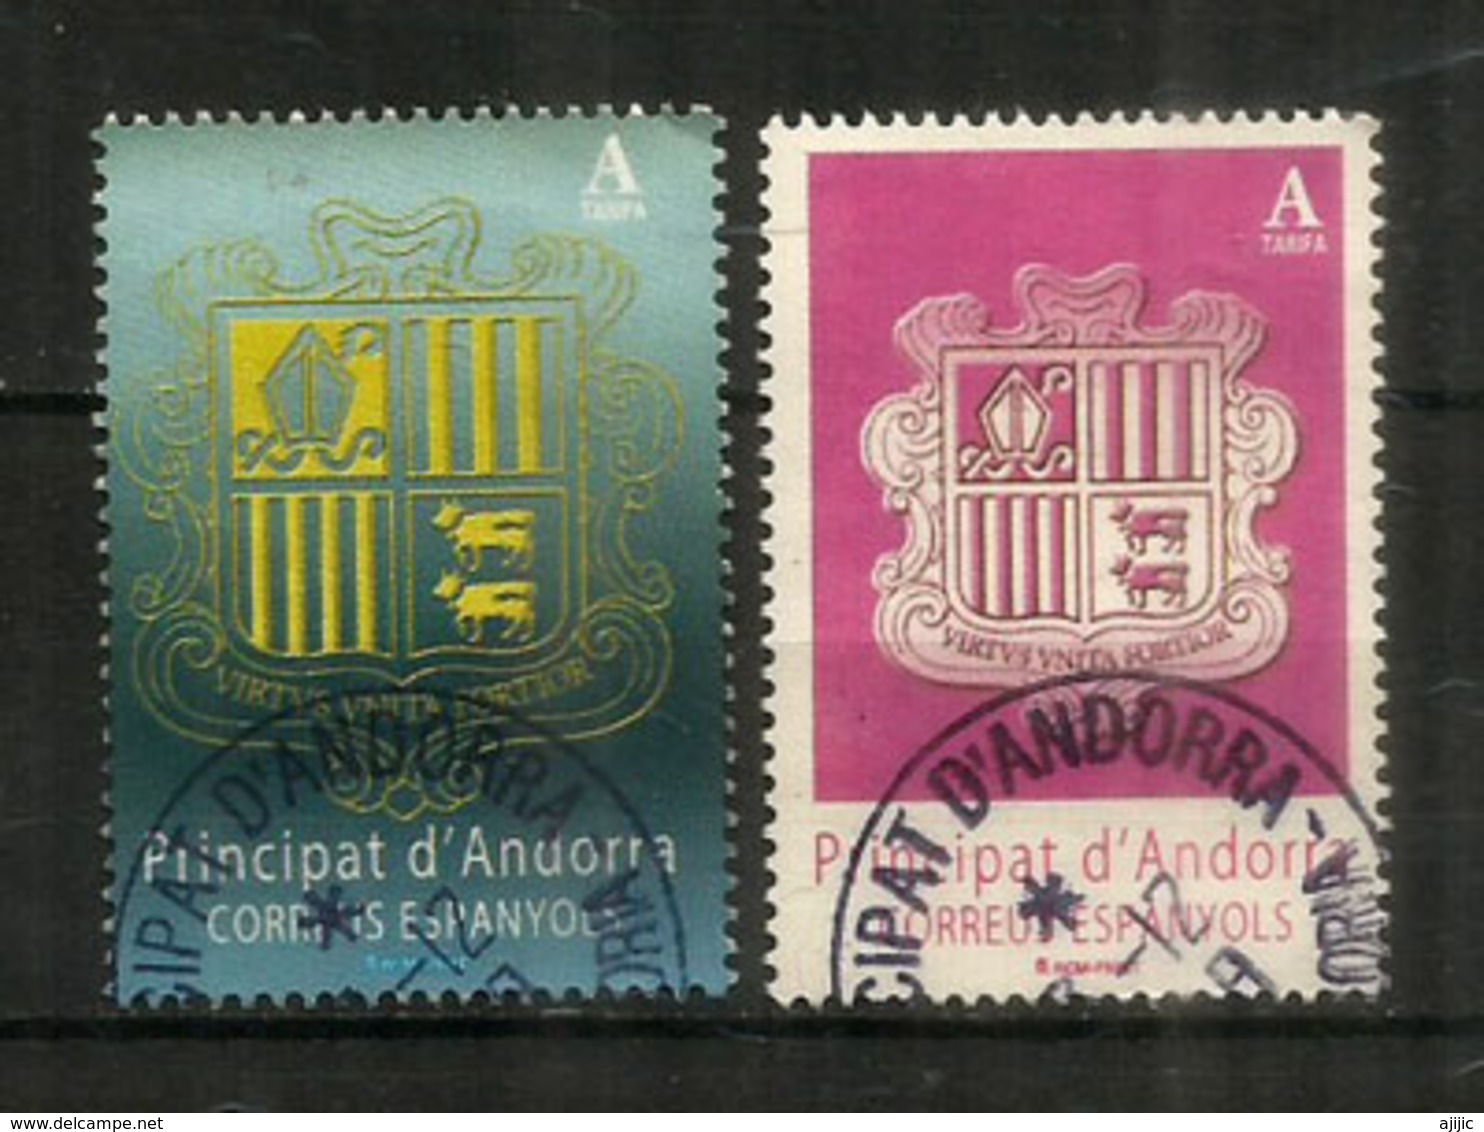 ANDORRA. Nouveaux Blasons D'Andorre 2018. Deux Timbres Obliteres, 1 Ere Qualite. AND.ESP - Used Stamps